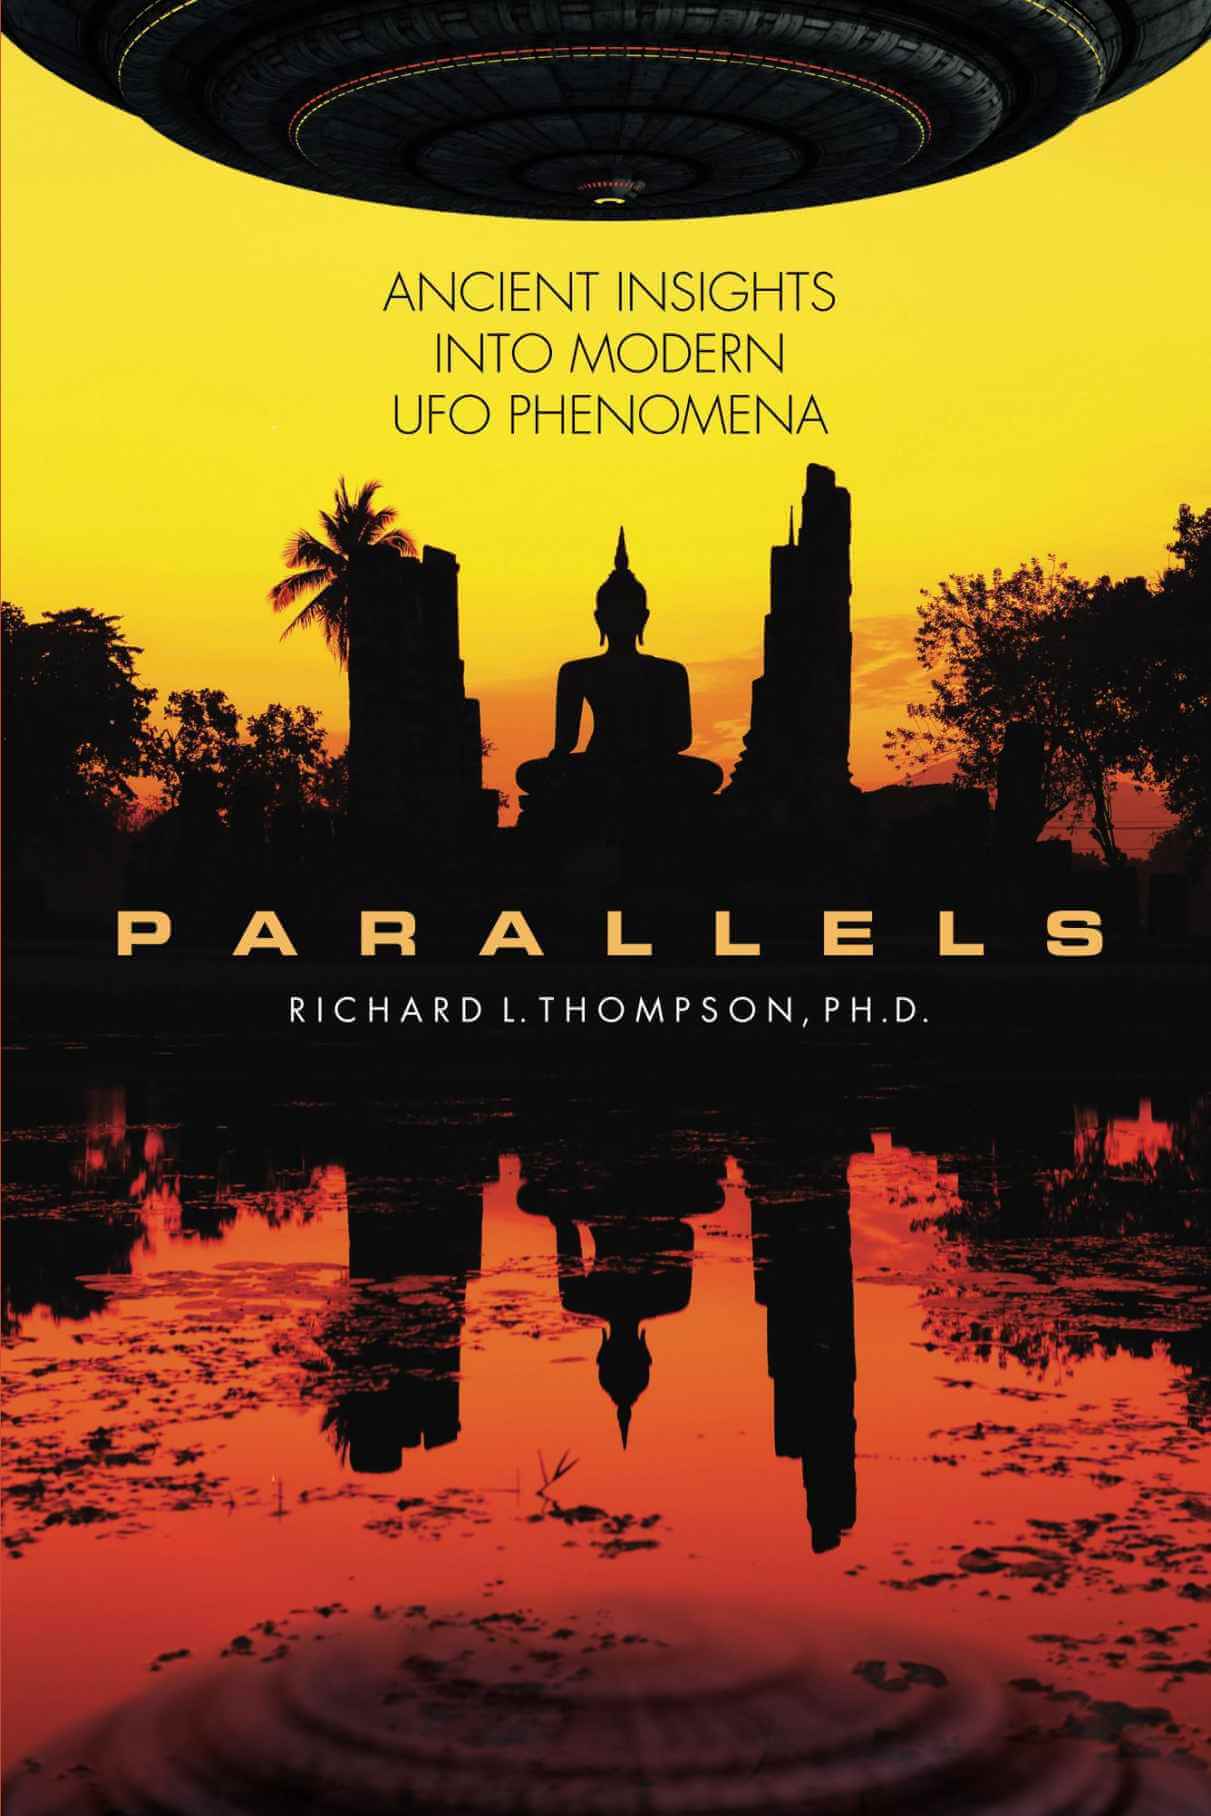 Parallels - 古代对现代 UFO 现象的洞察